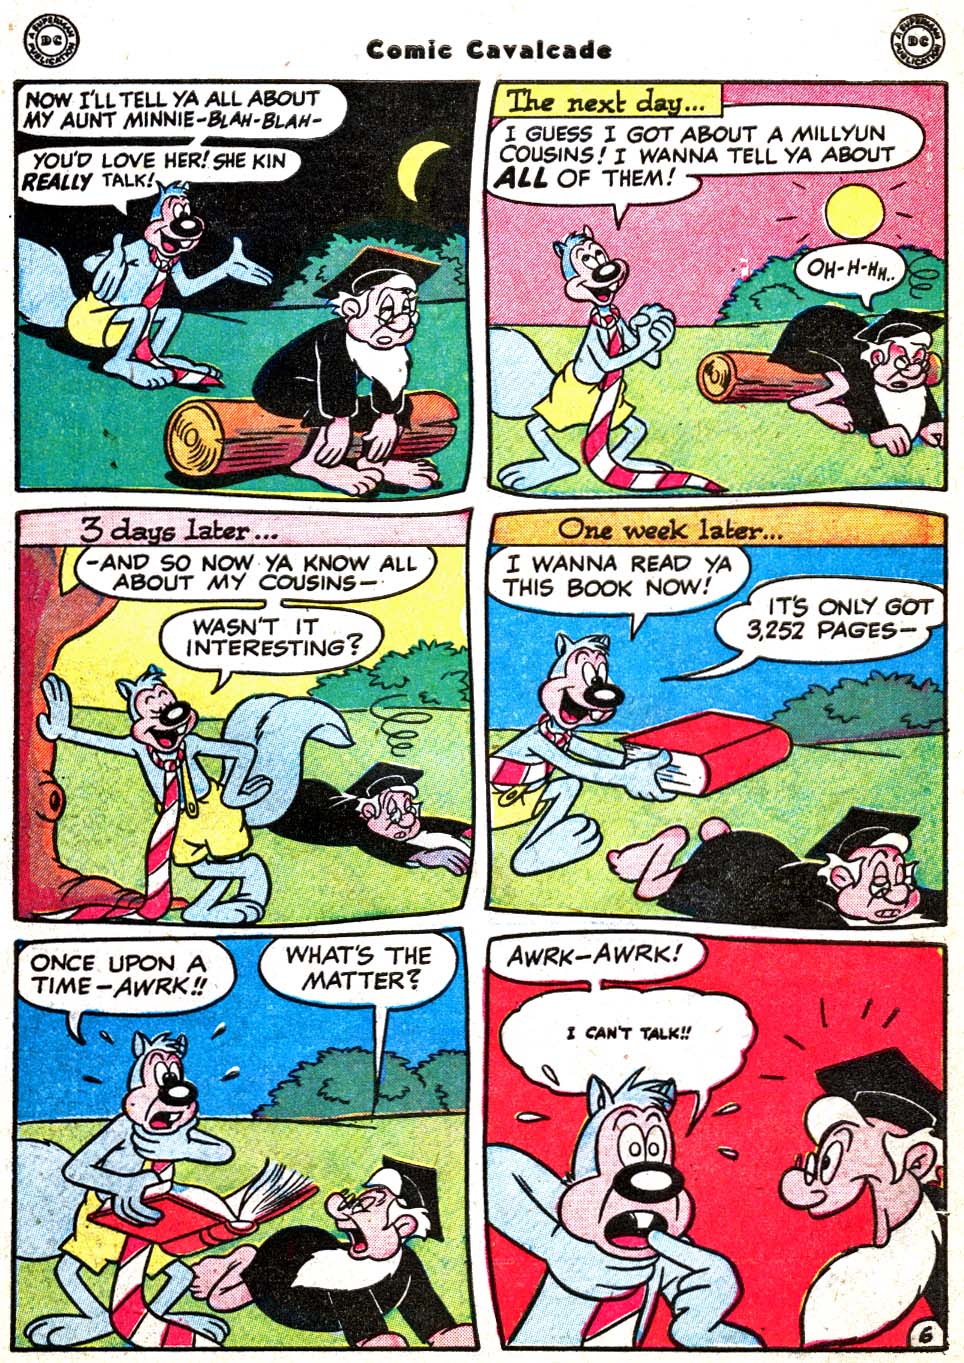 Comic Cavalcade issue 31 - Page 41